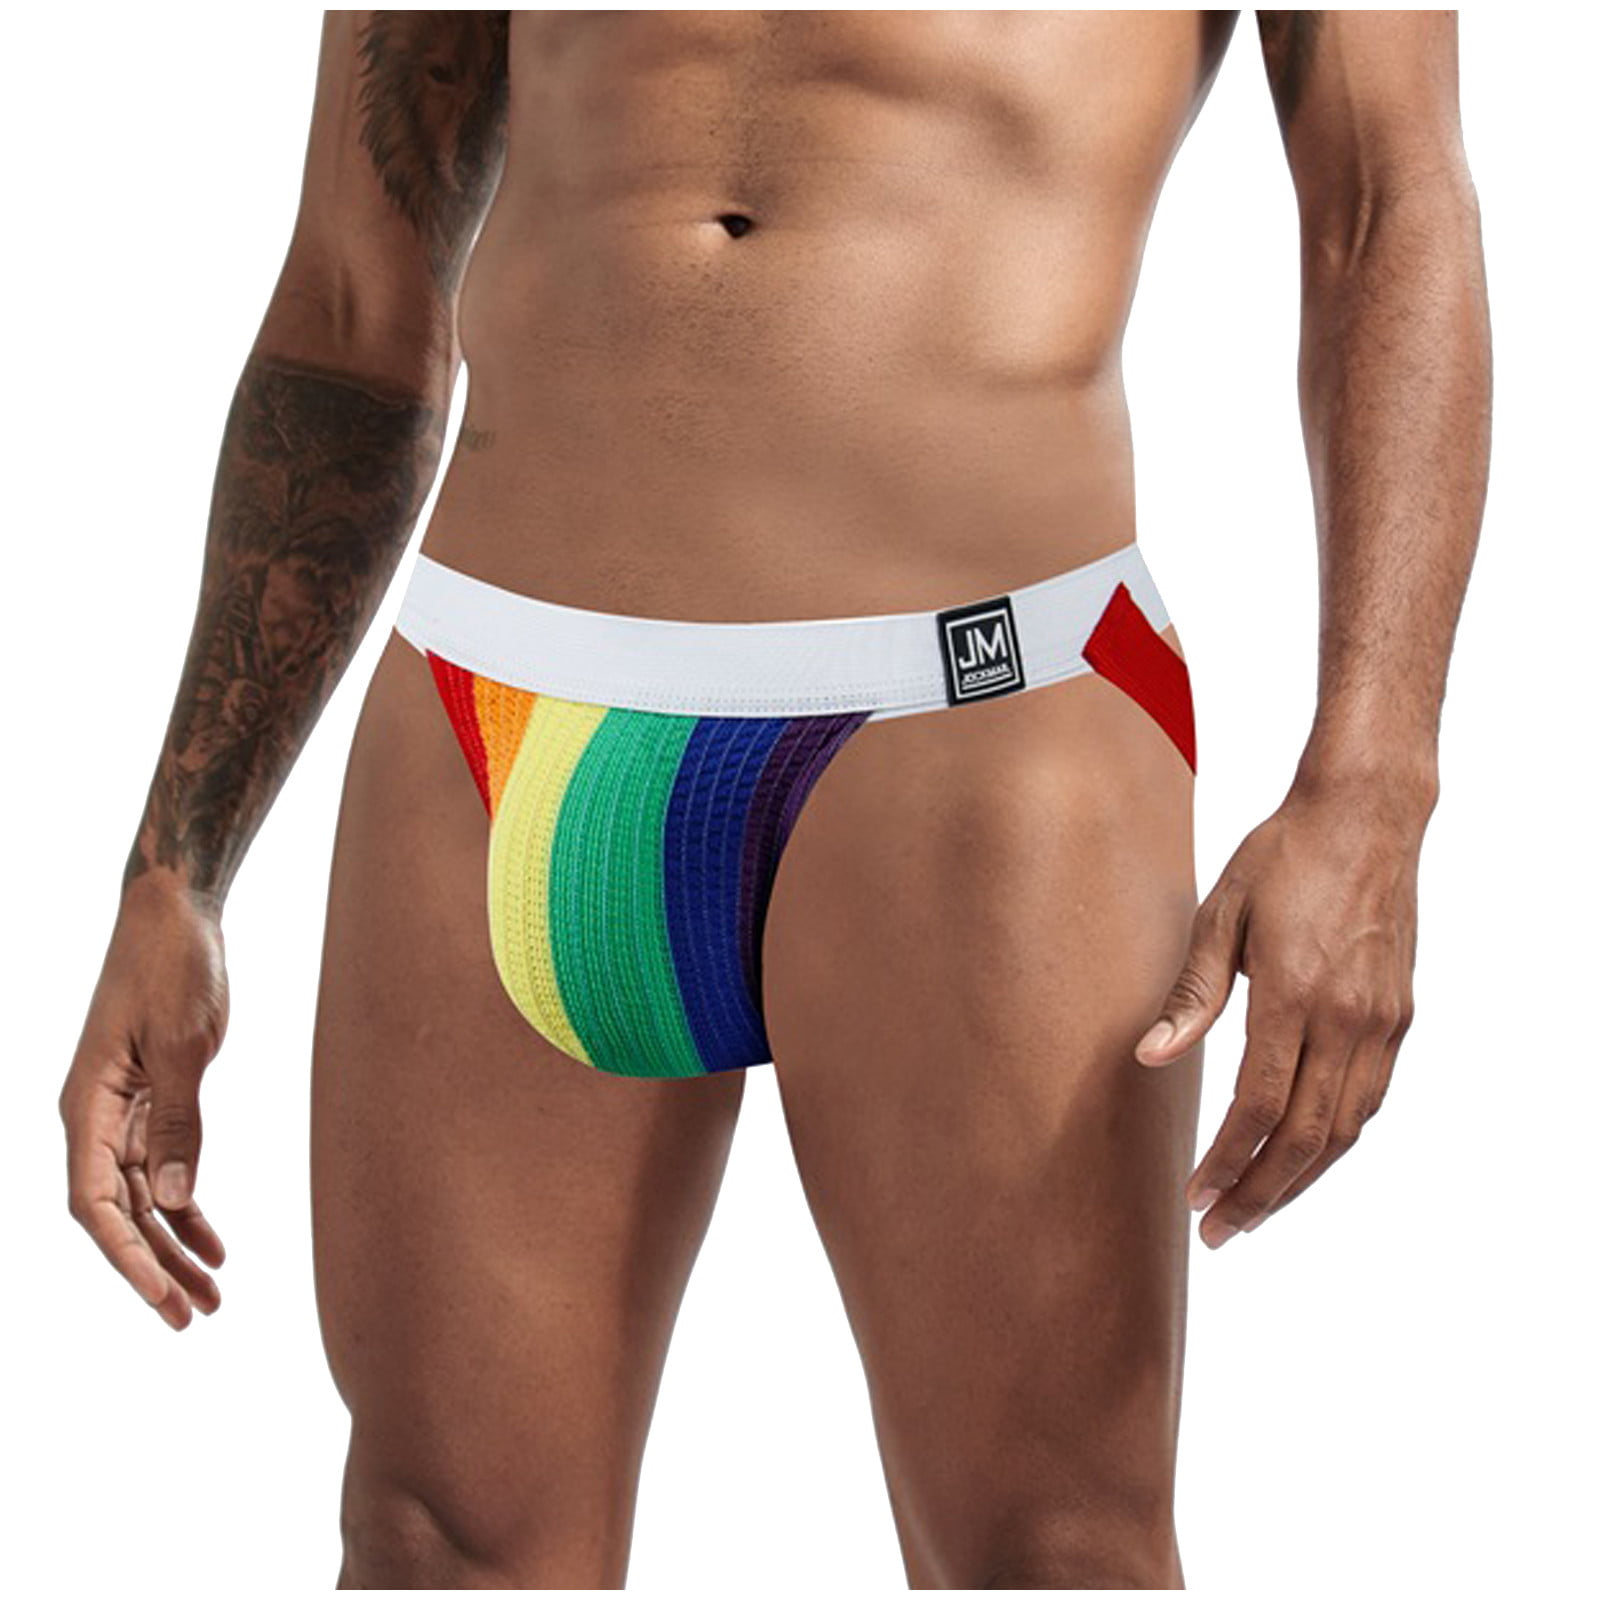 Men's Sexy Underwear Slassic Sports Fitness Rainbow Color Double